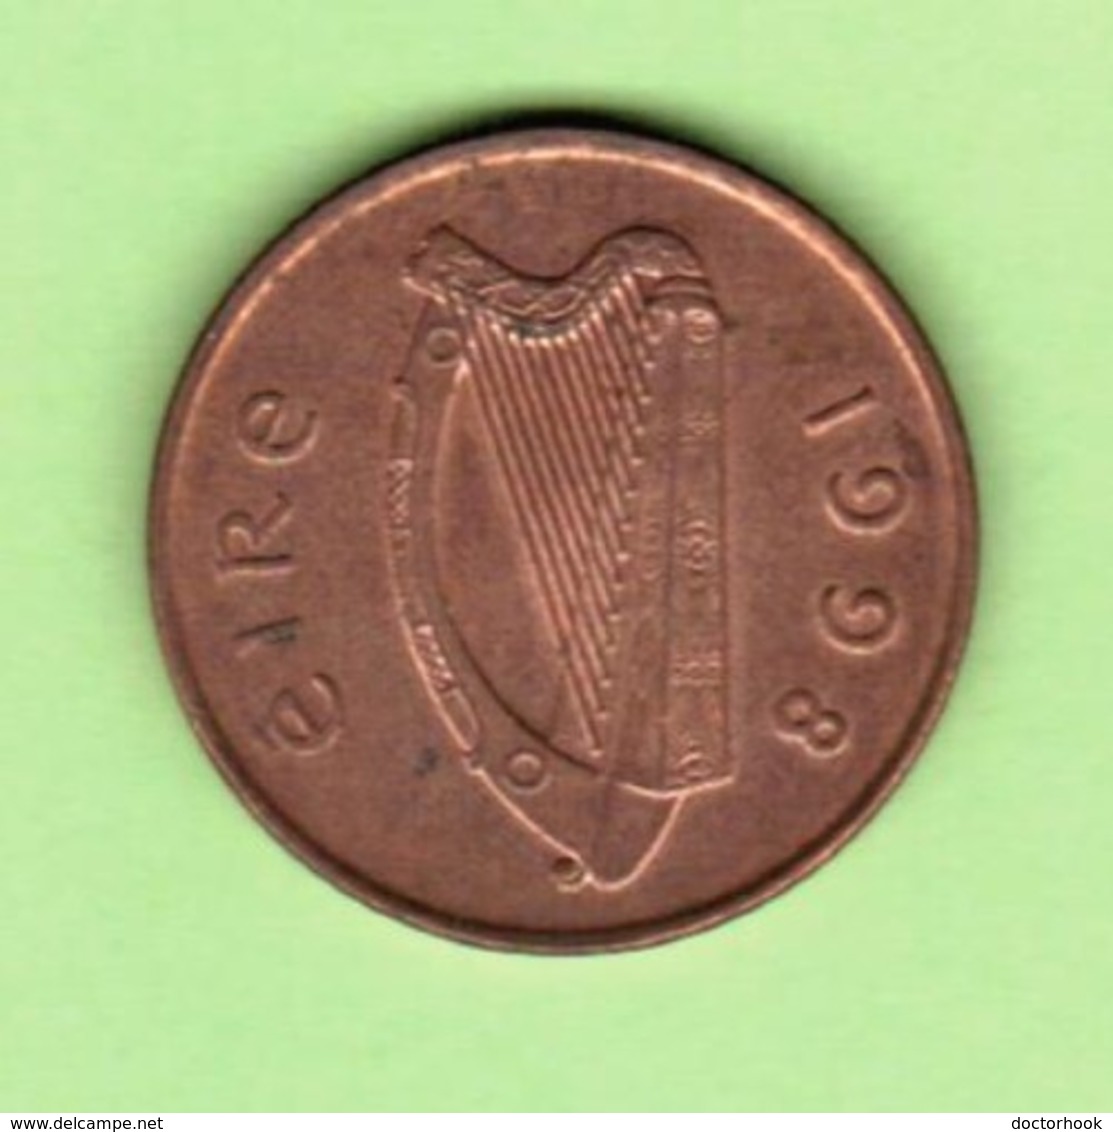 IRELAND   2 PENCE 1998  (KM # 21) #5213 - Irlande